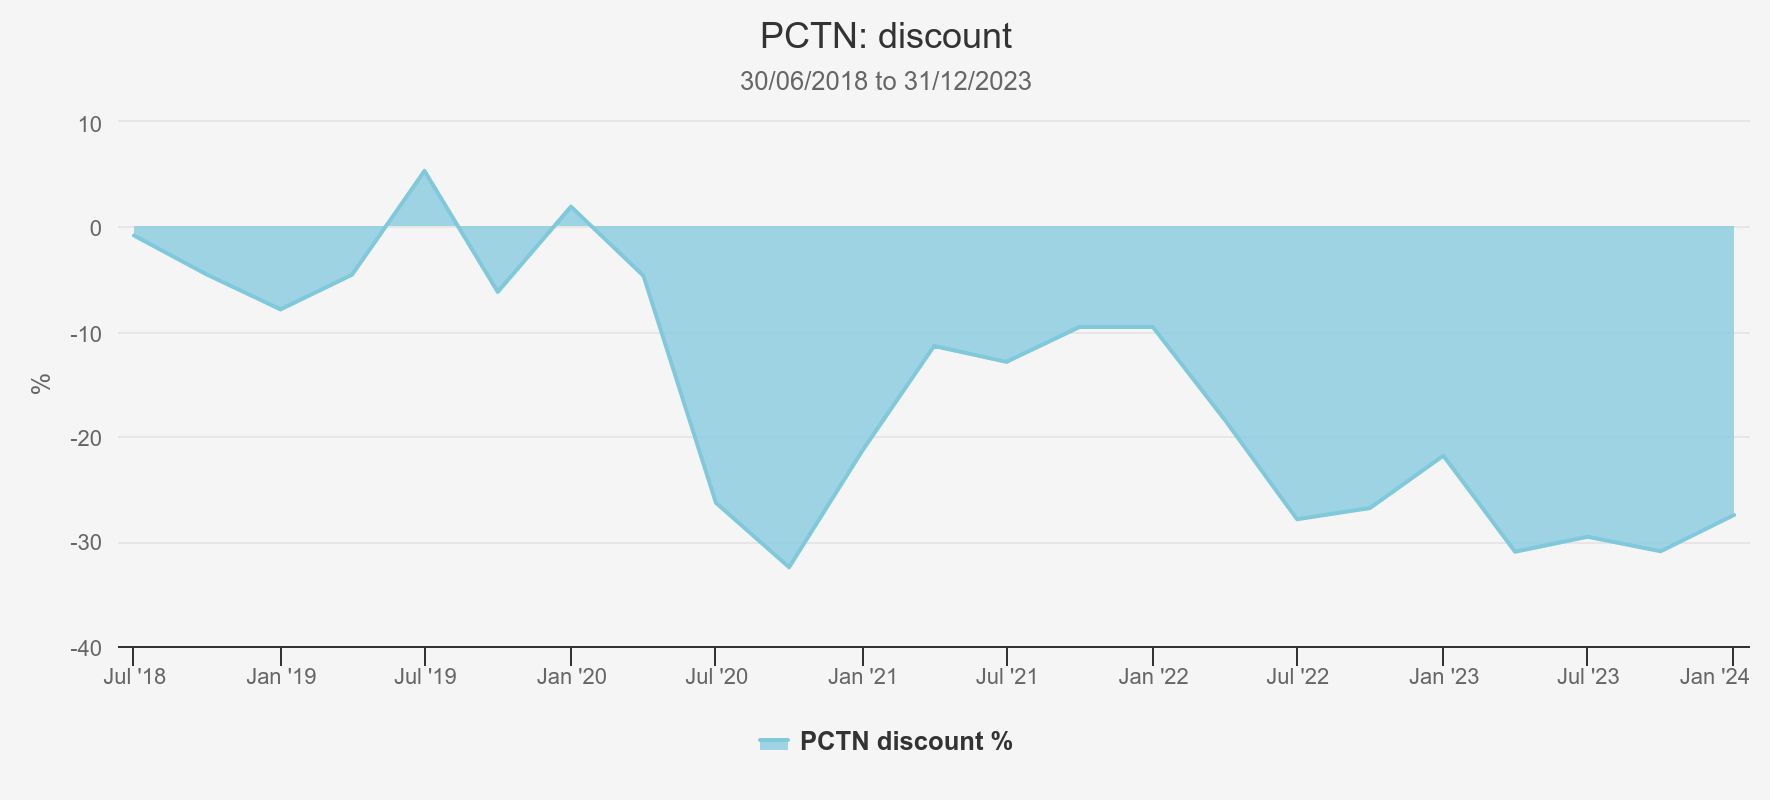 Picton trust discount Kepler chart